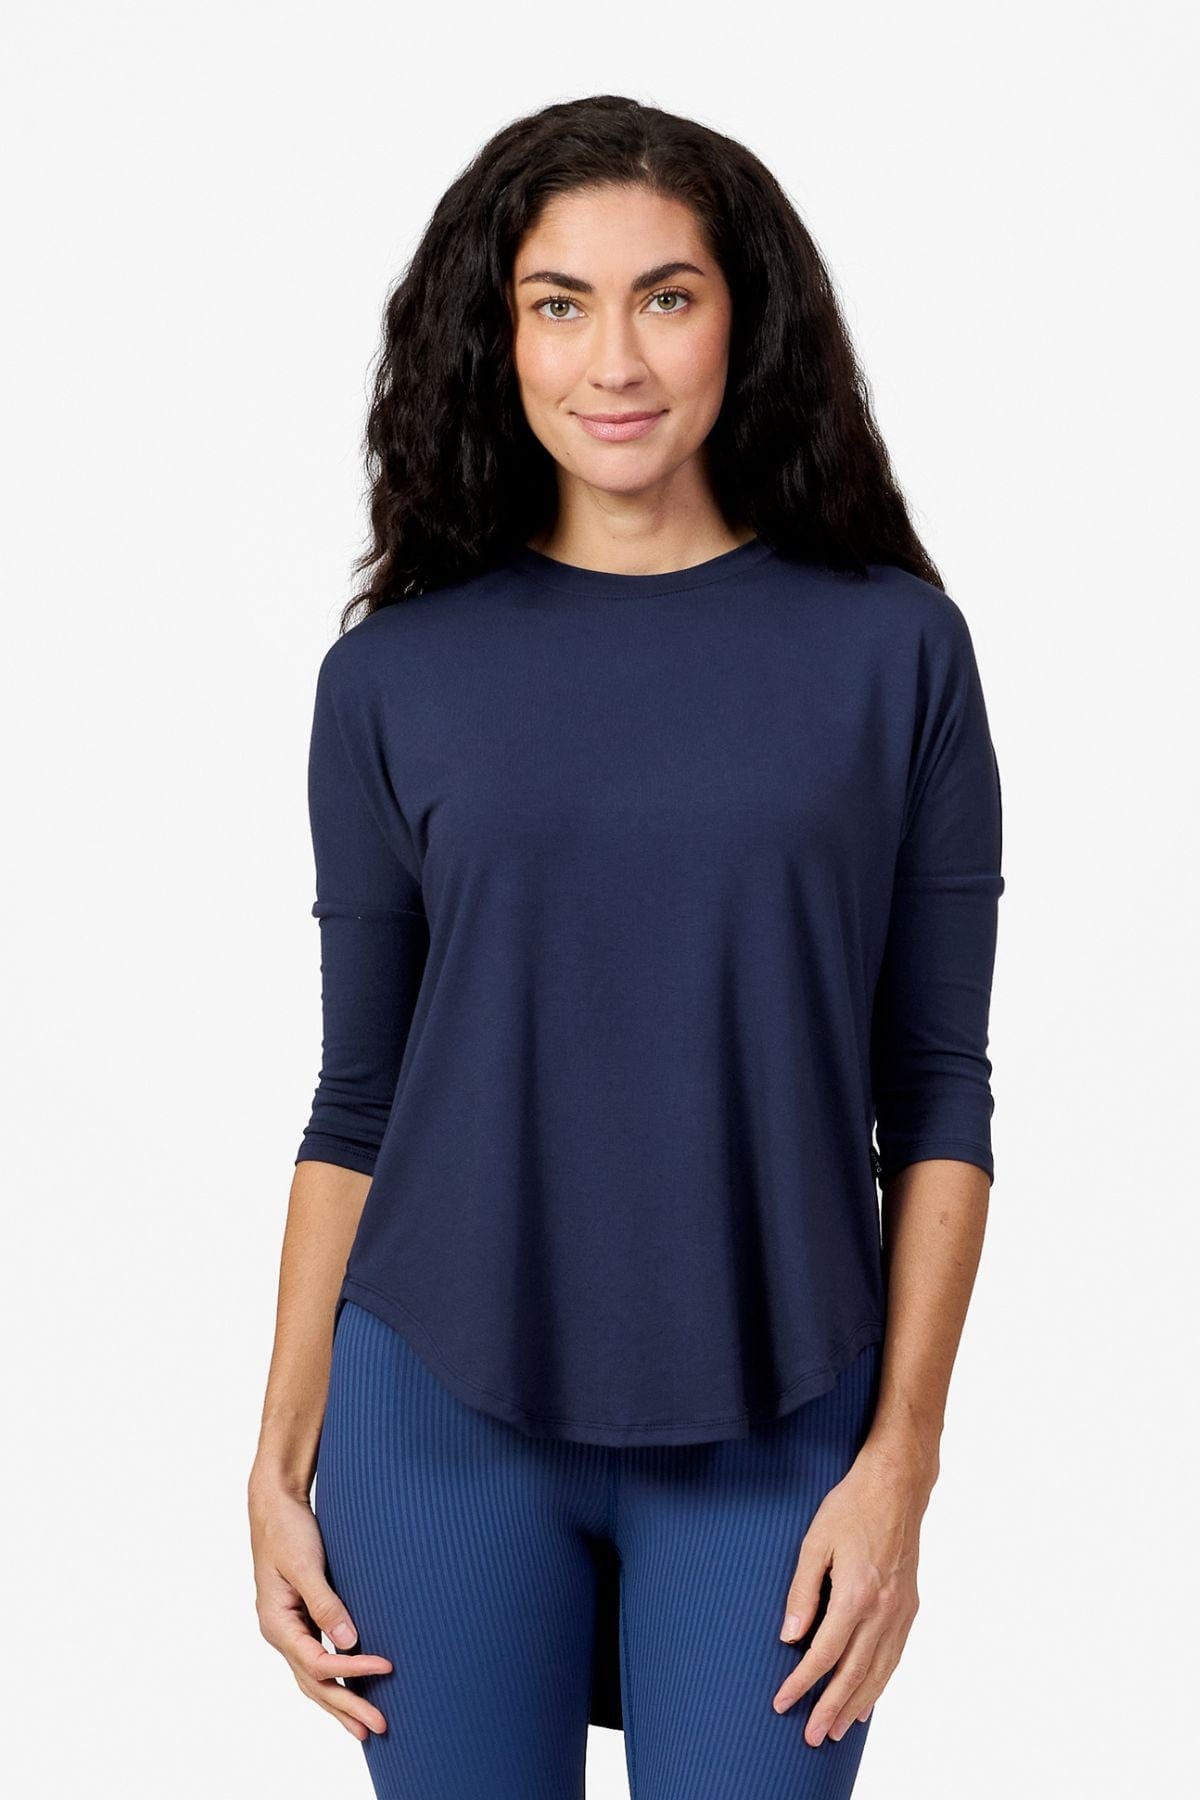 Woman wearing a navy 3/4 length sleeve shirt